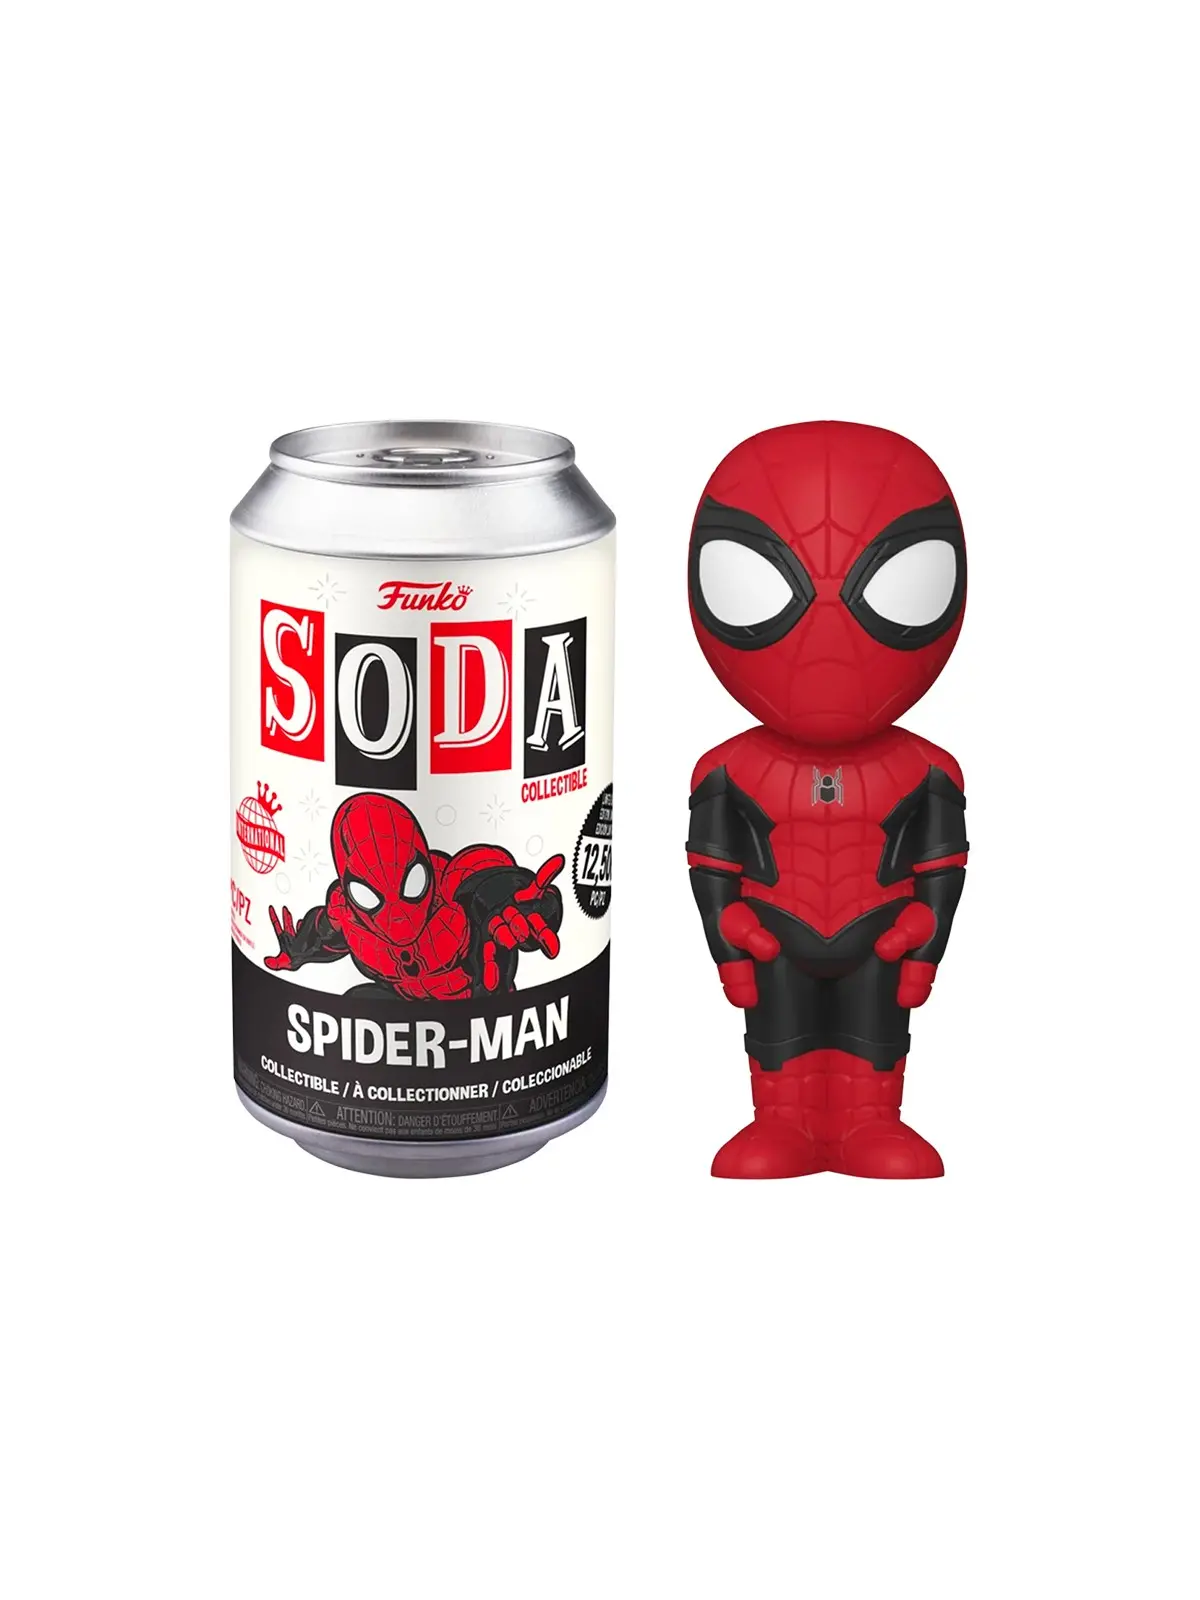 Funko Vinyl Soda Spiderman S2